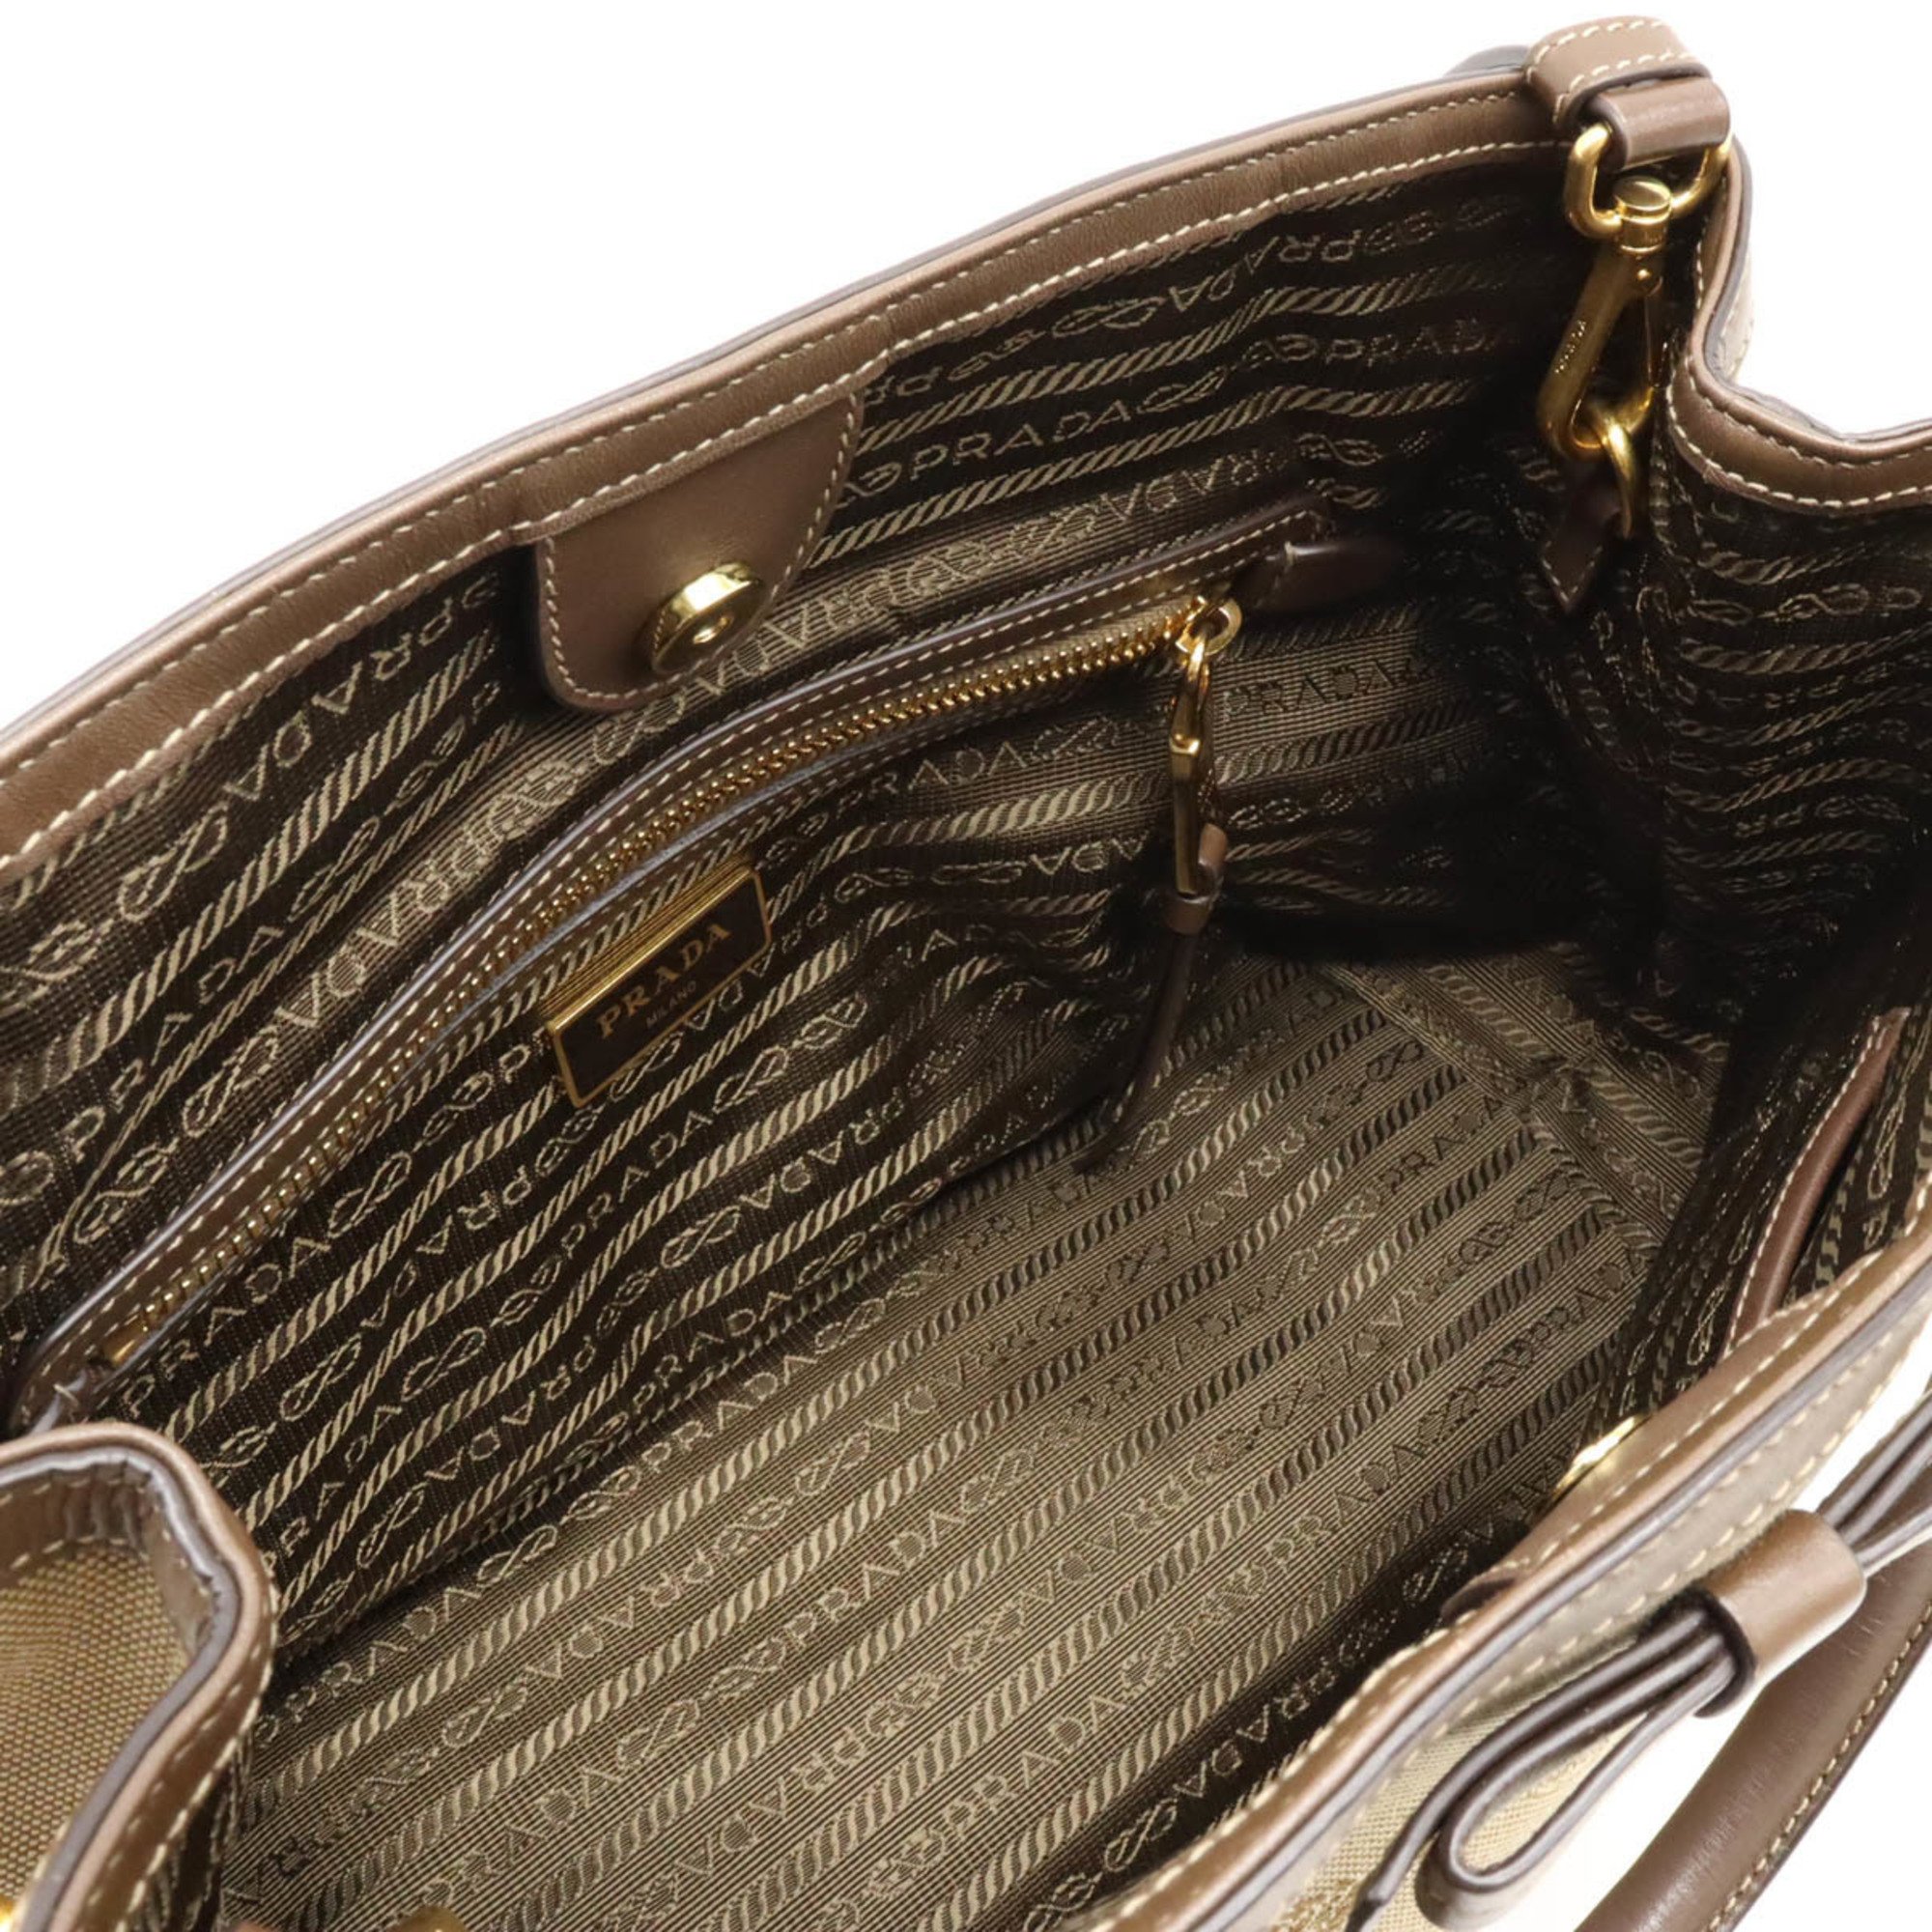 PRADA Prada Jacquard Handbag Shoulder Bag Canvas Leather CORDA Khaki Beige BRUCIA Mocha Brown Purchased at Japan Outlet 1BA172